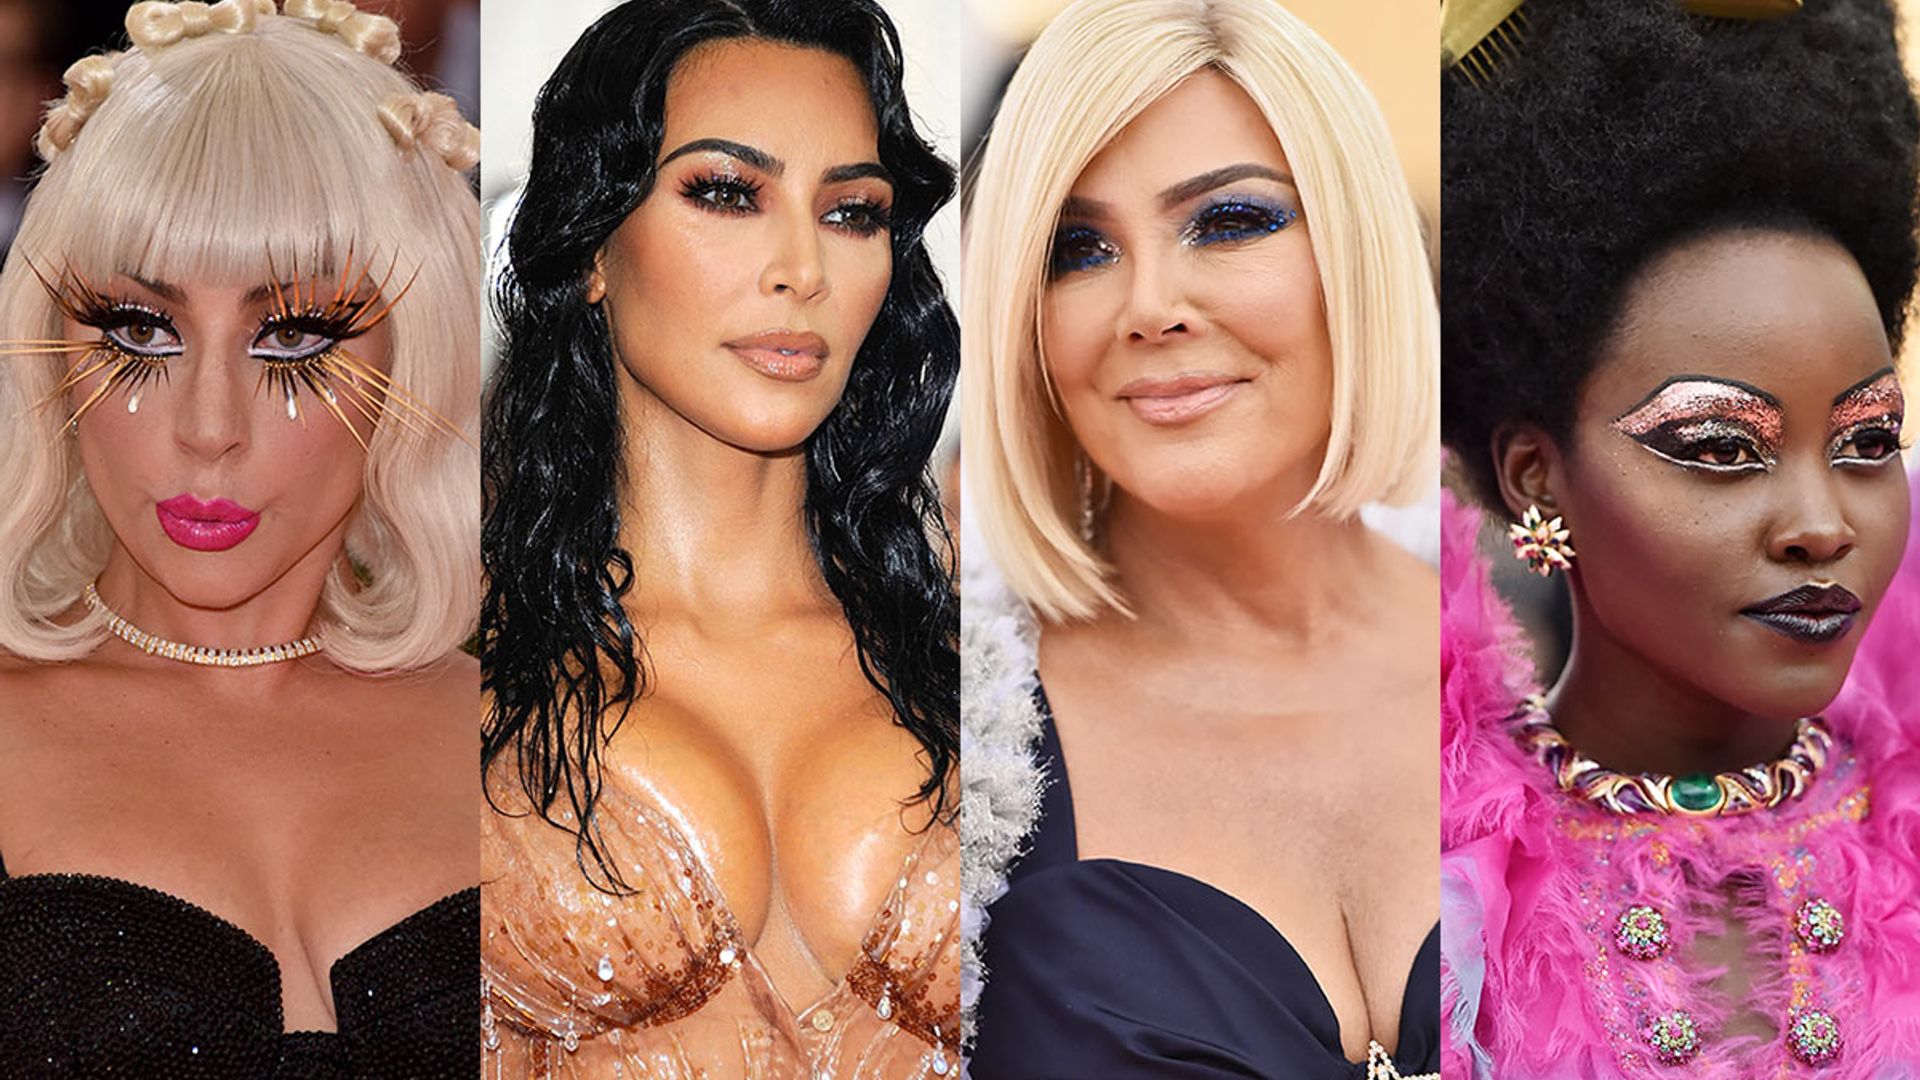 Kris Jenner Wears Blonde Bob Hairstyle at Met Gala 2019